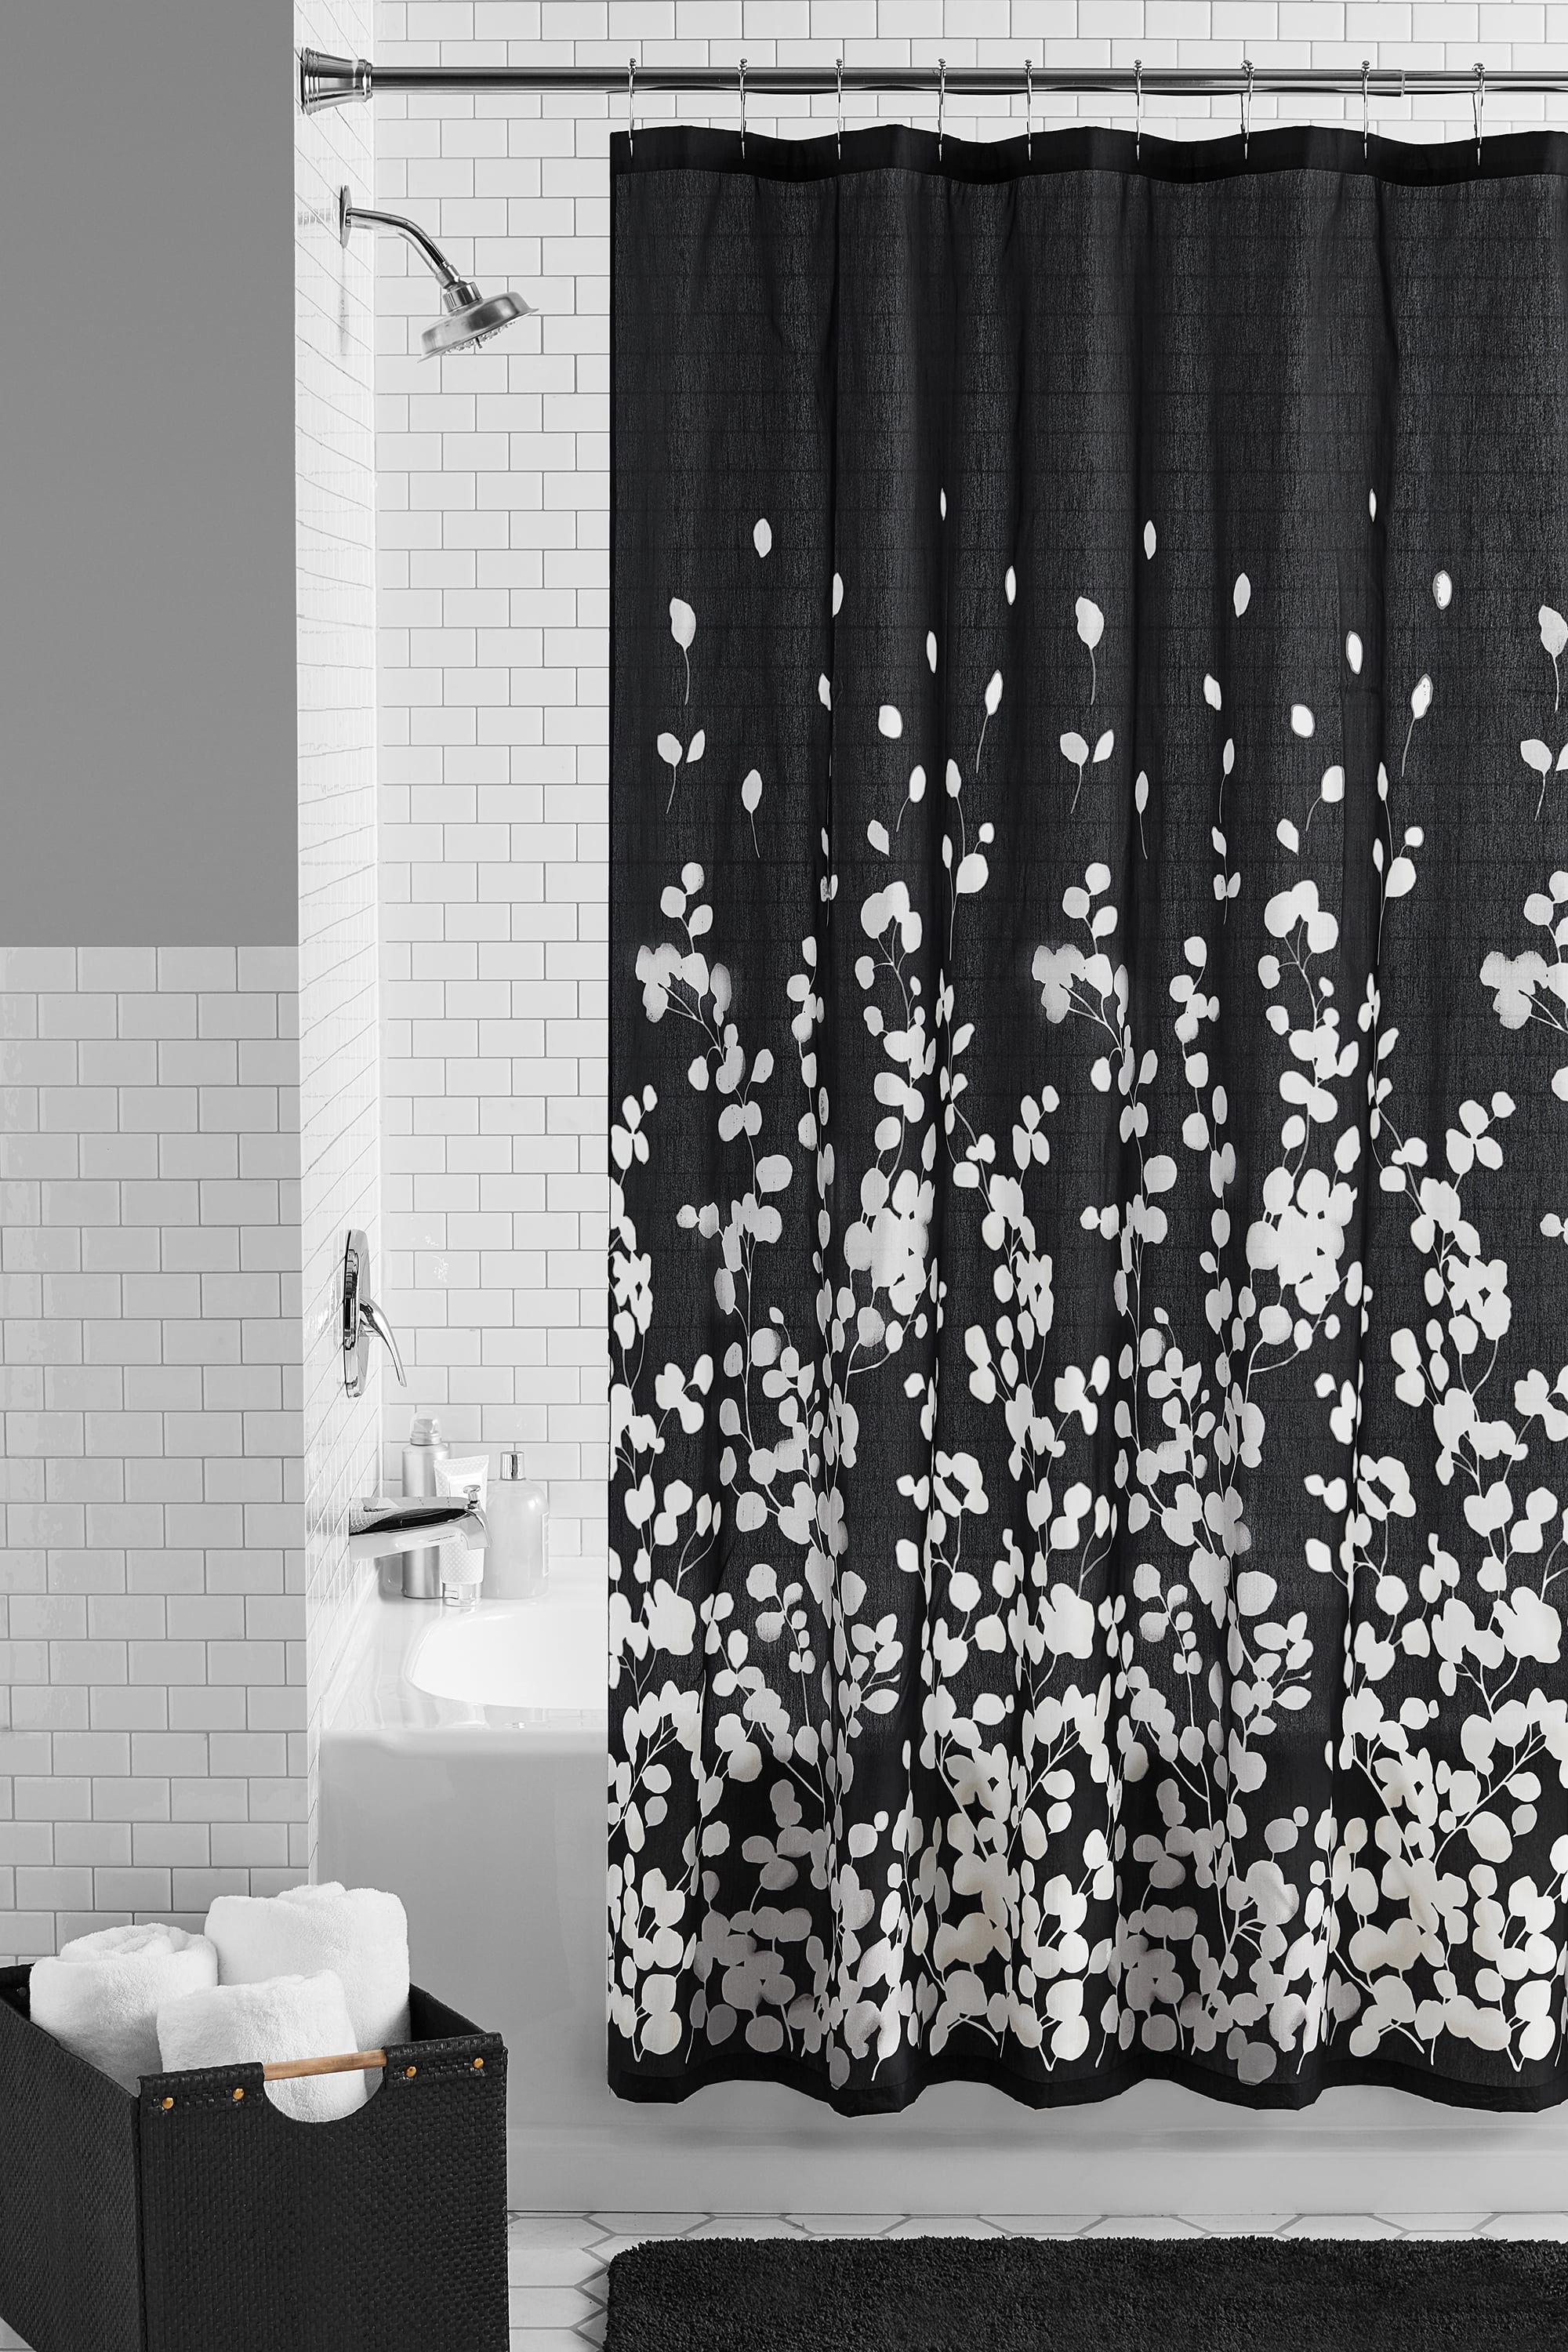 Mainstays Sylvia Lightweight Semi-Sheer Fabric Shower Curtain, 72" x 72", Black and White